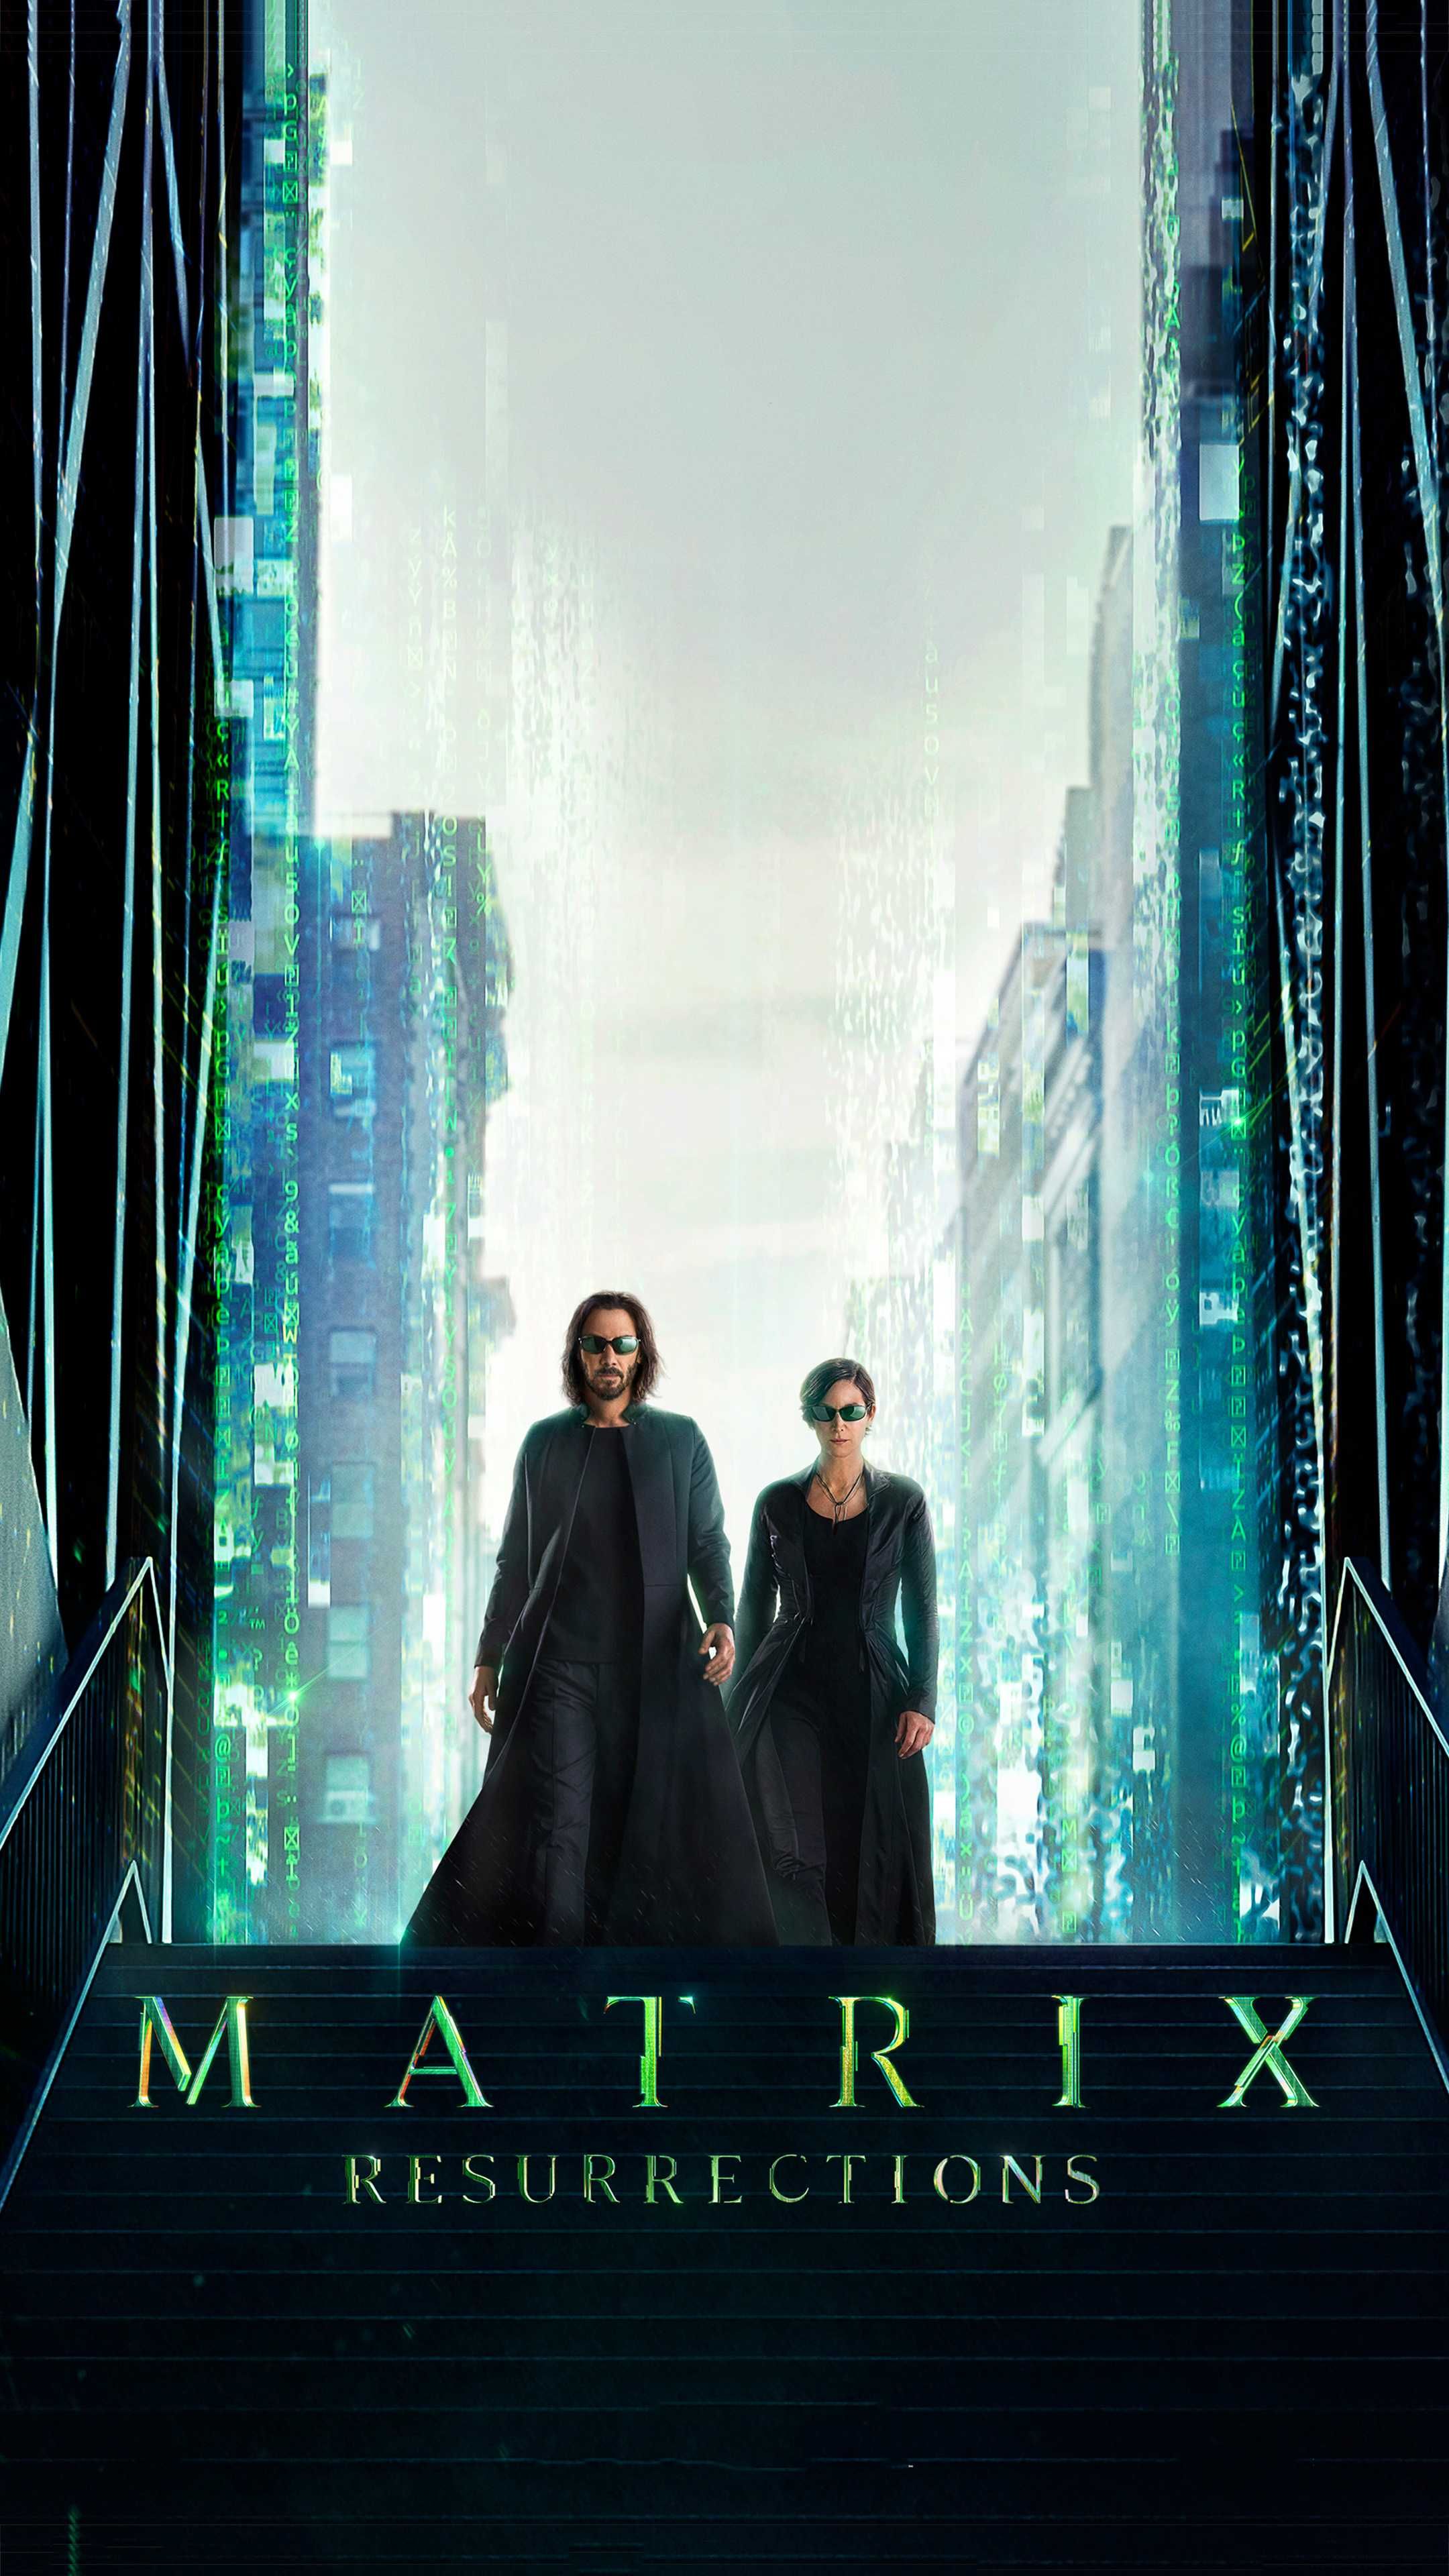 Hd The Matrix Reserructions Poster Wallpapers